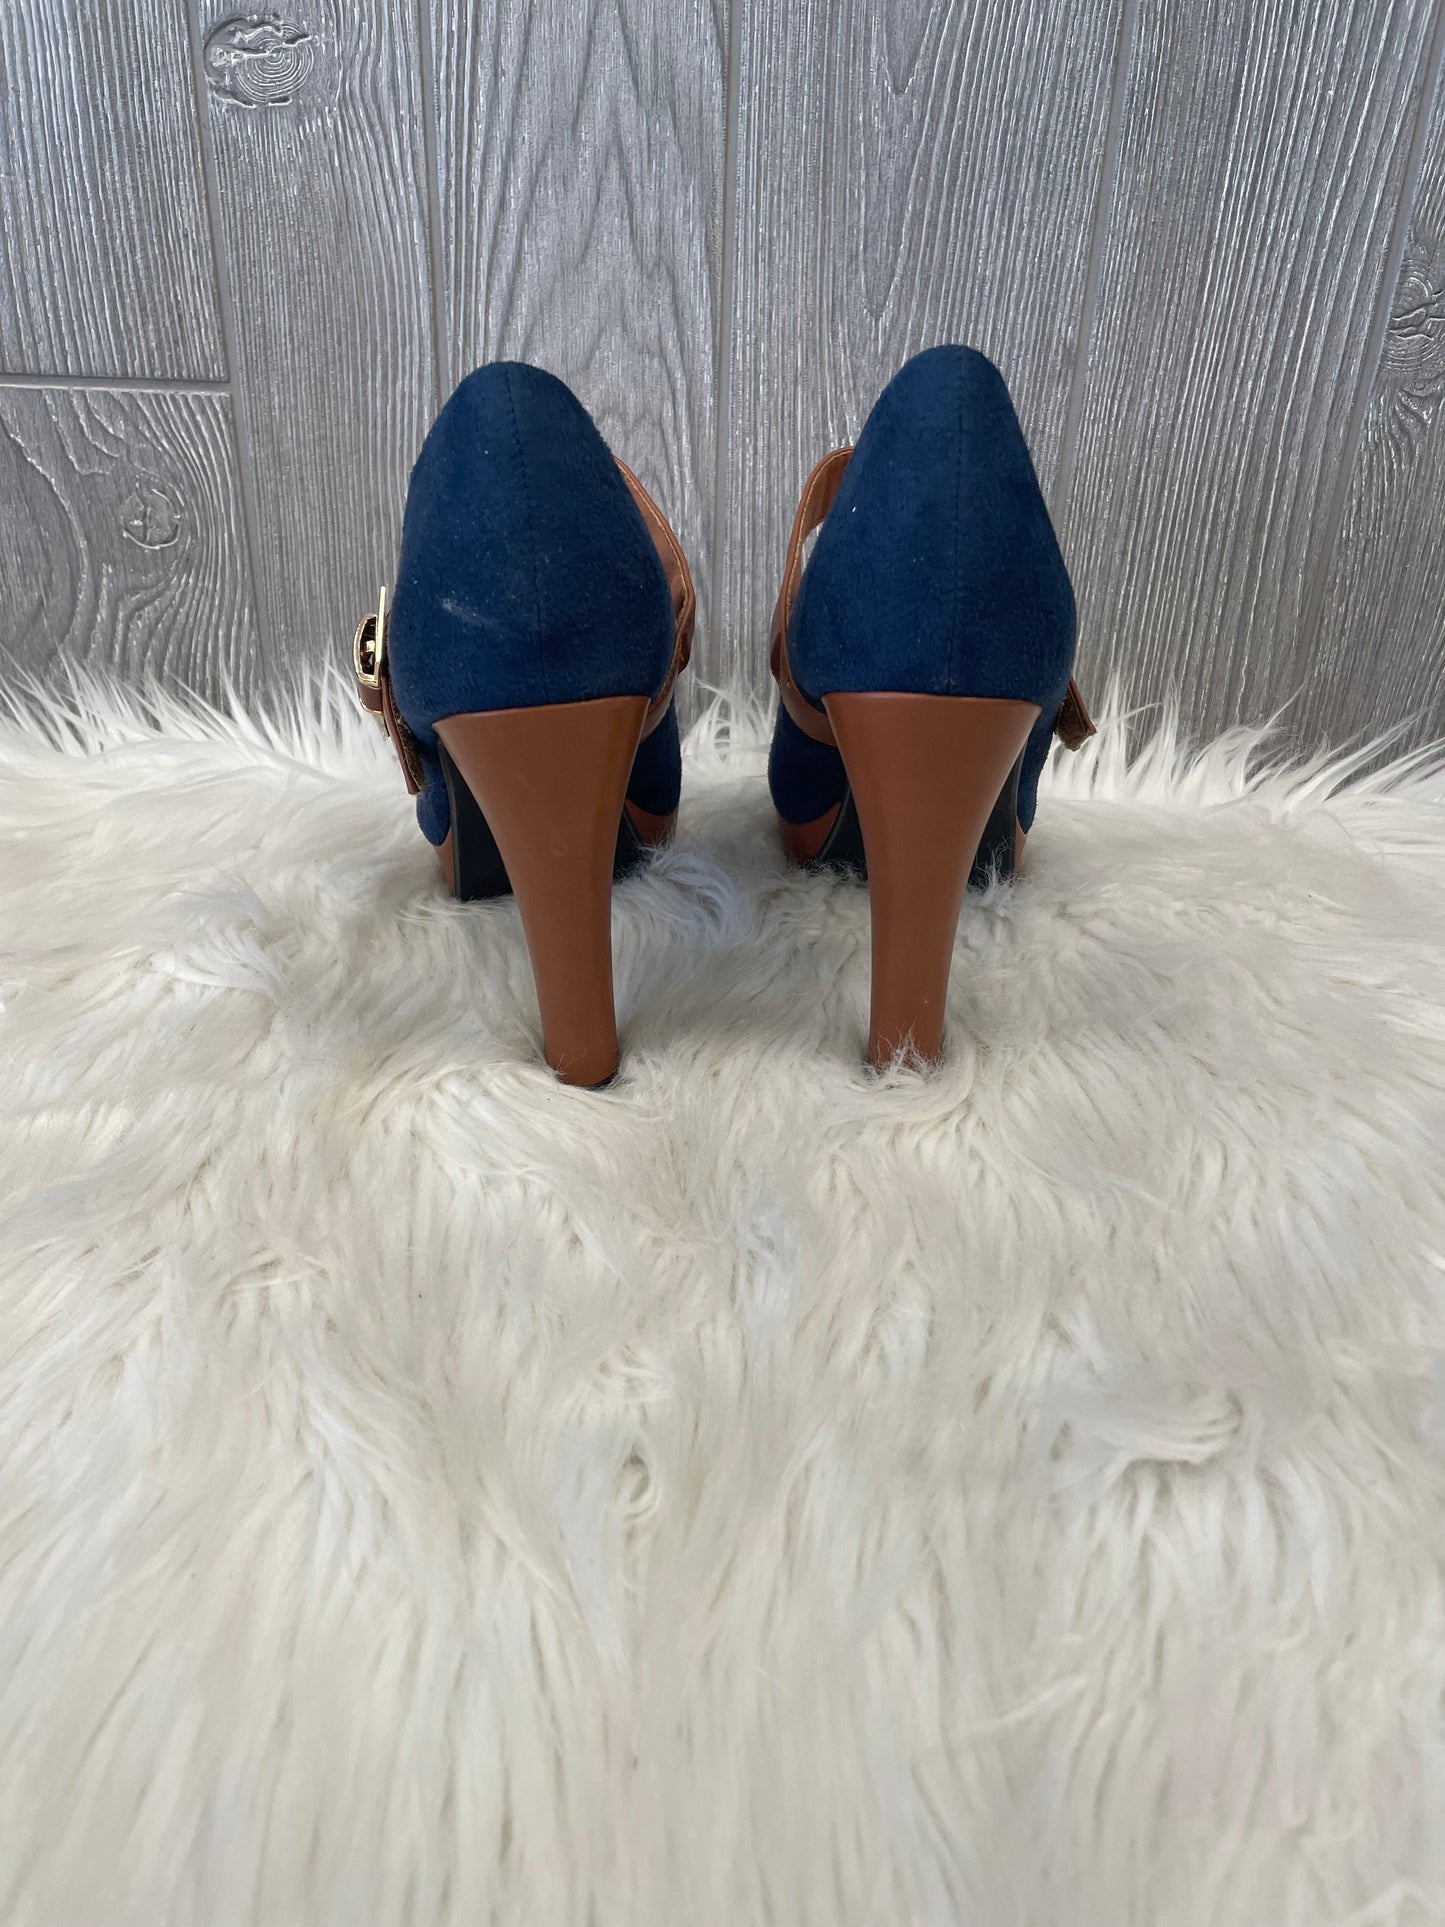 Blue Shoes Heels Stiletto Clothes Mentor, Size 8.5